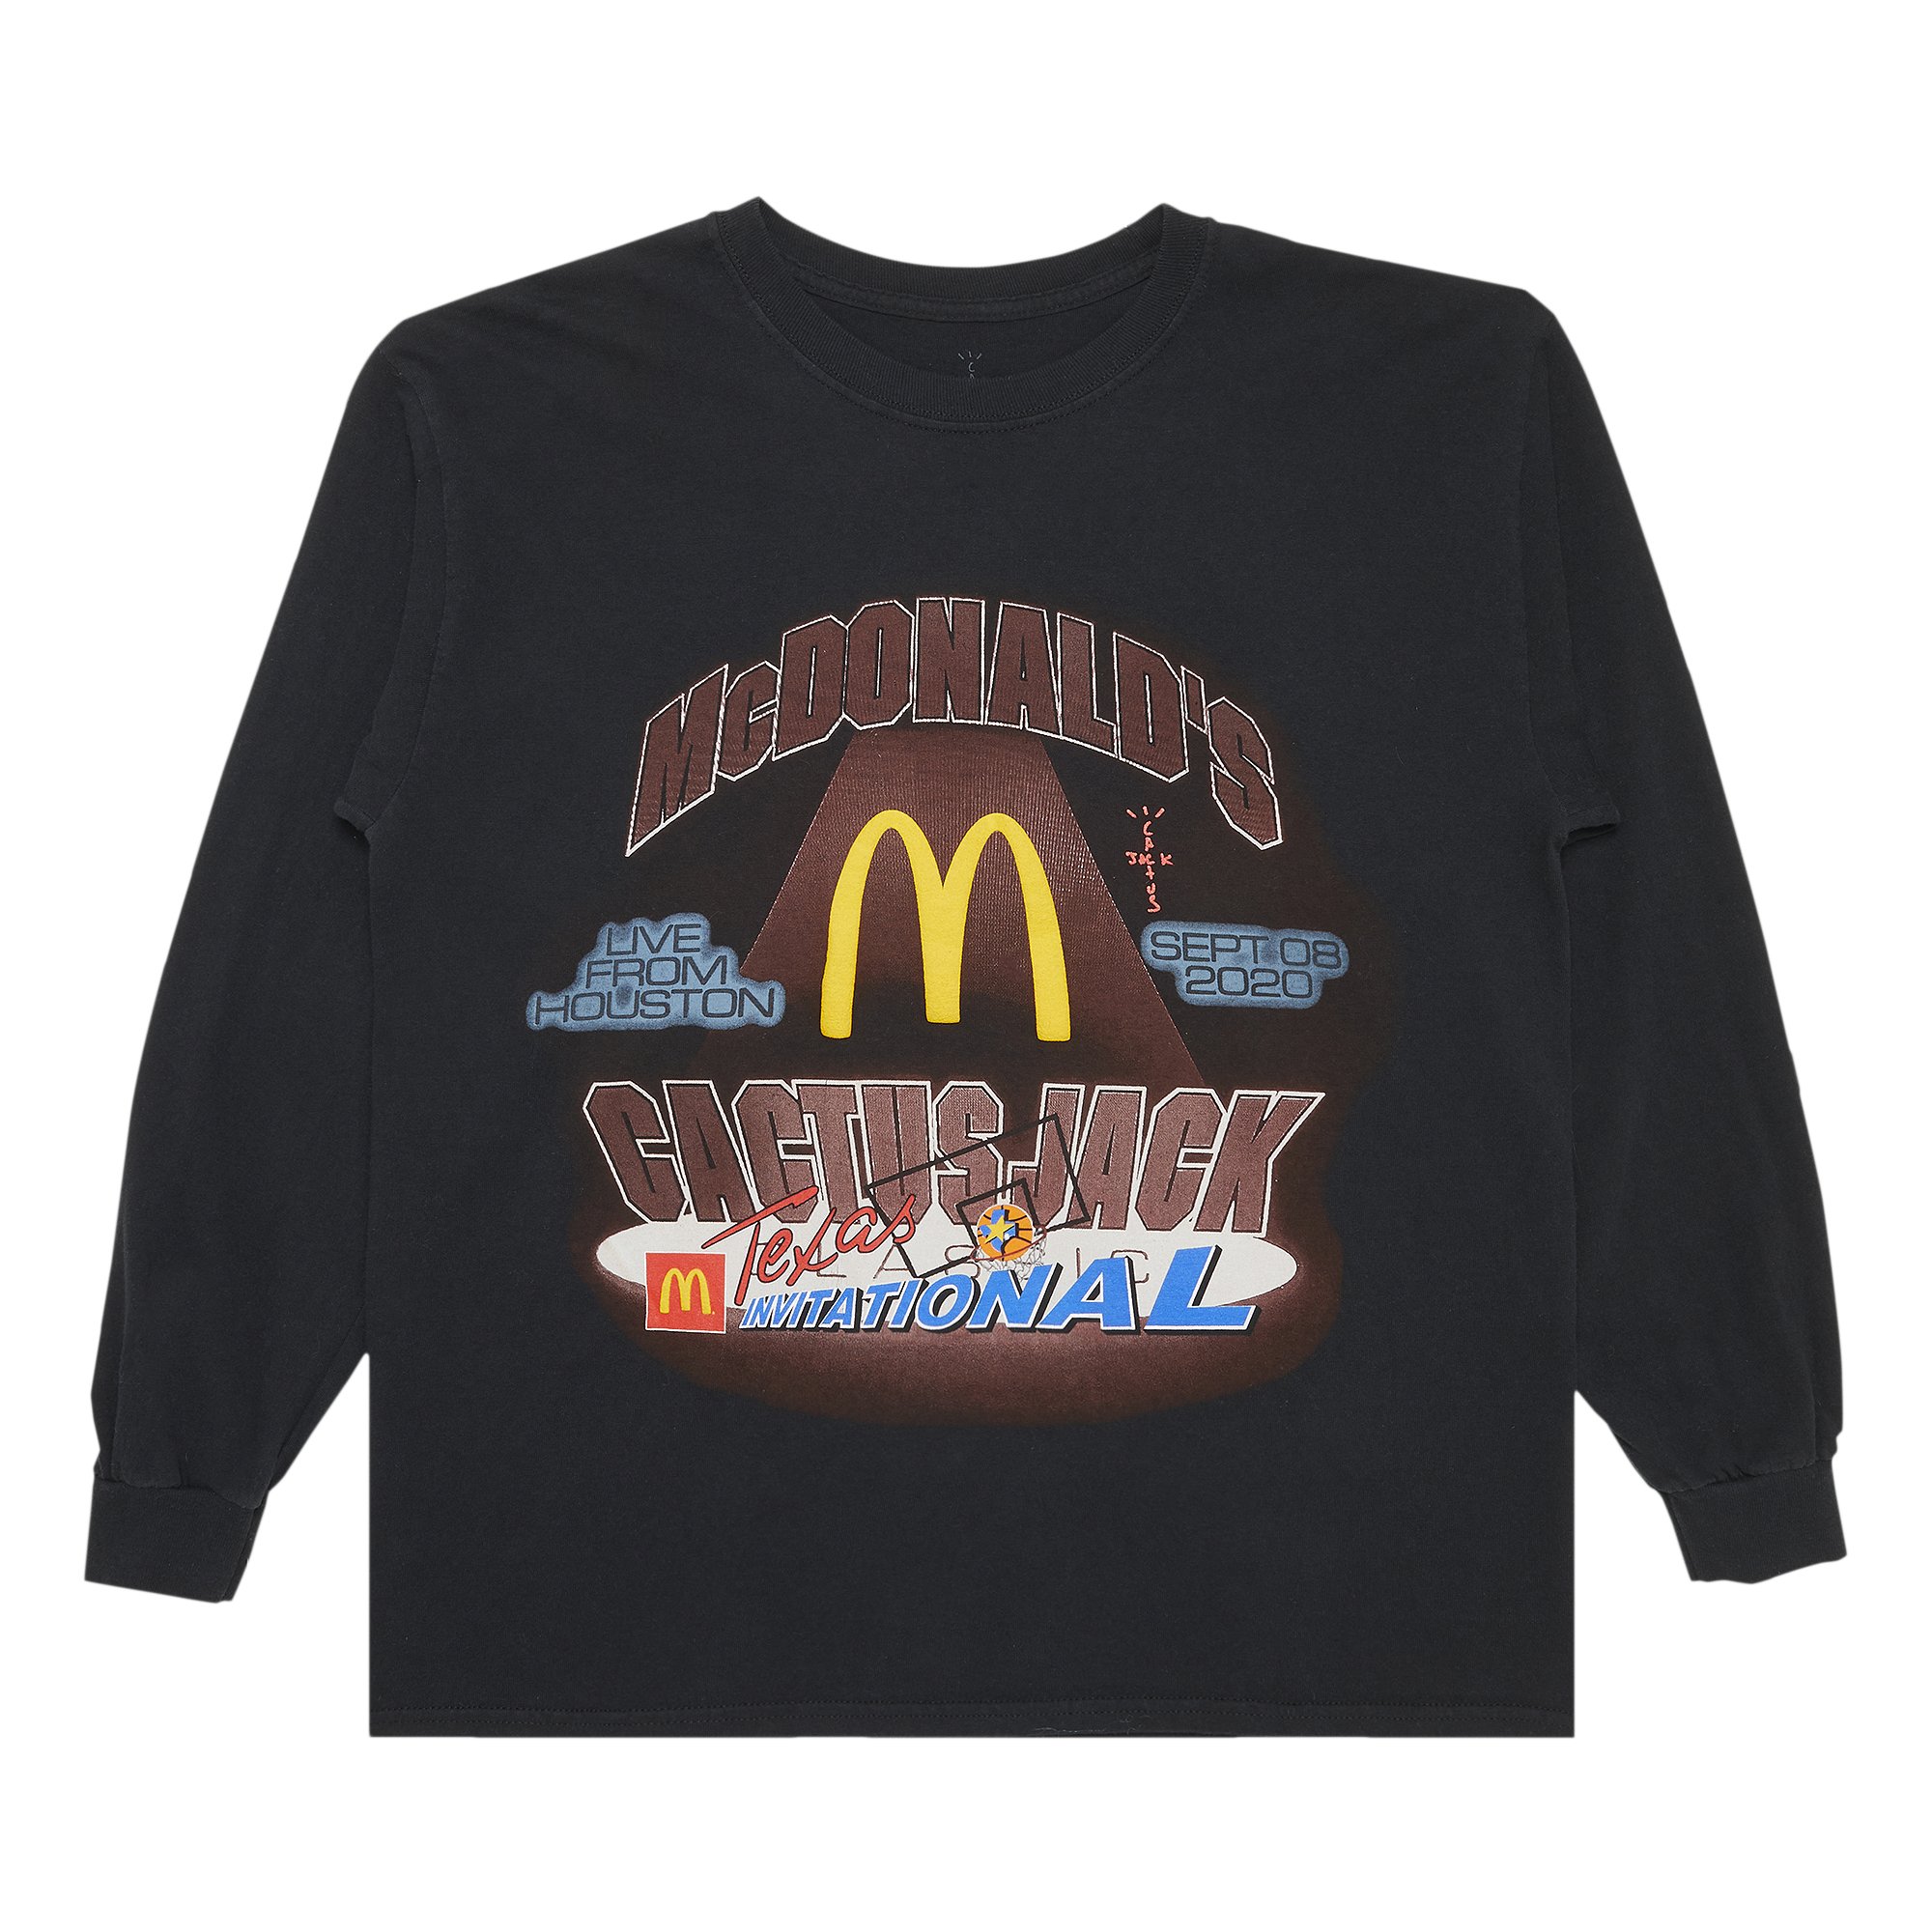 Cactus Jack by Travis Scott x McDonald's Invitational Long-Sleeve T-Shirt  'Black'